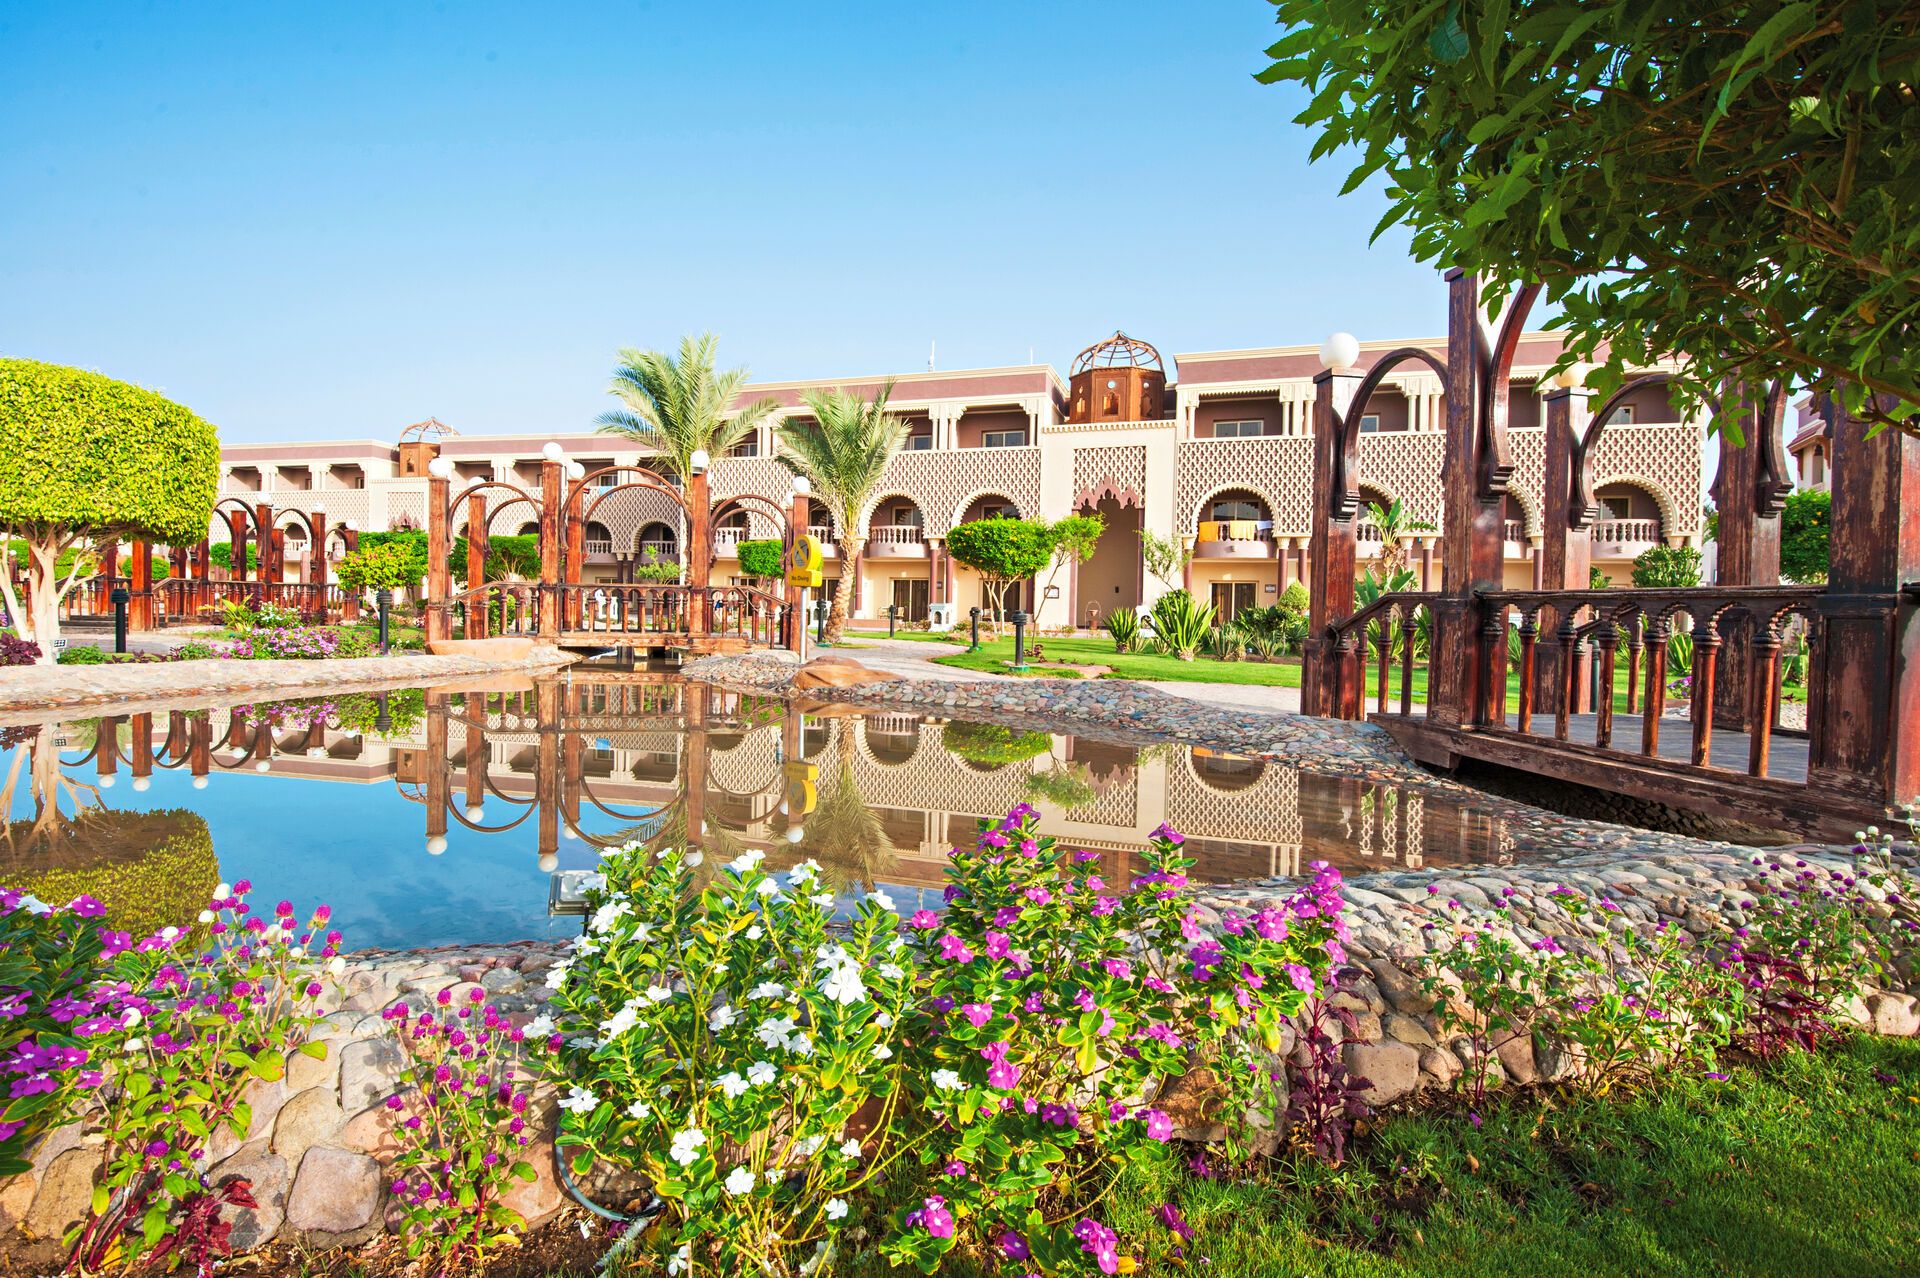 Egypte - Mer Rouge - Hurghada - Hôtel Sentido Mamlouk Palace Resort 5*